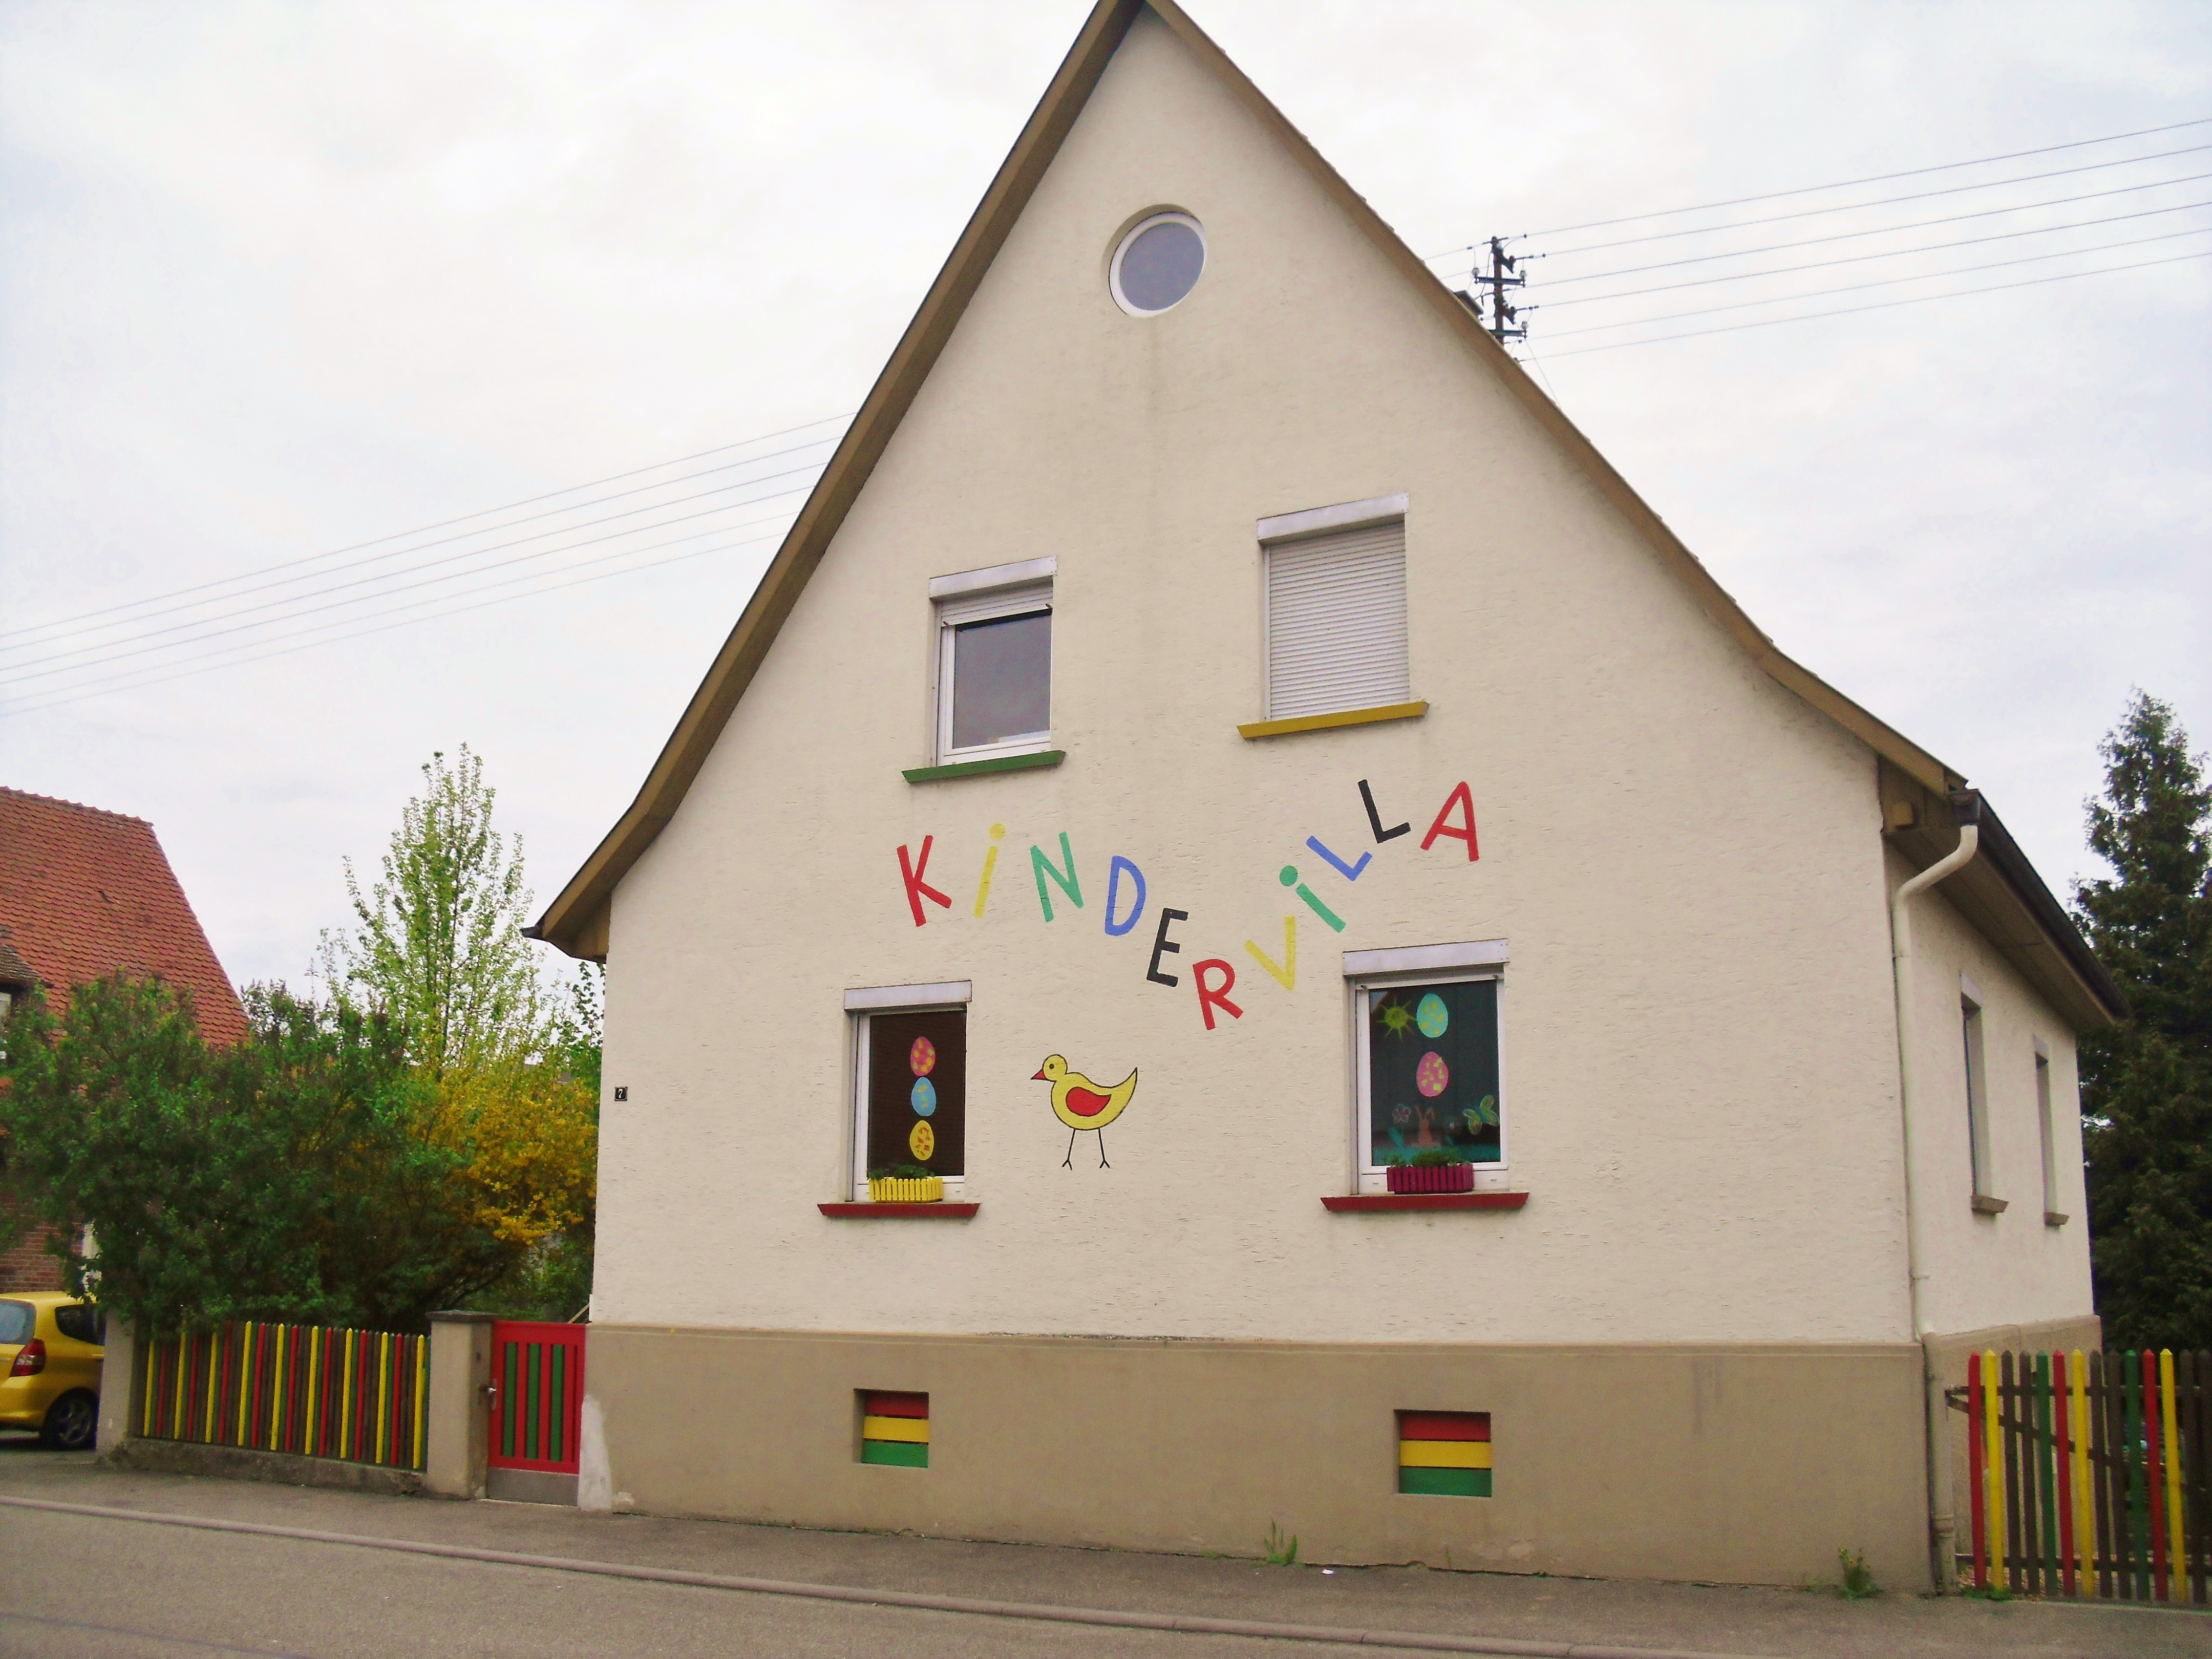  Kindervilla Meimsheim 